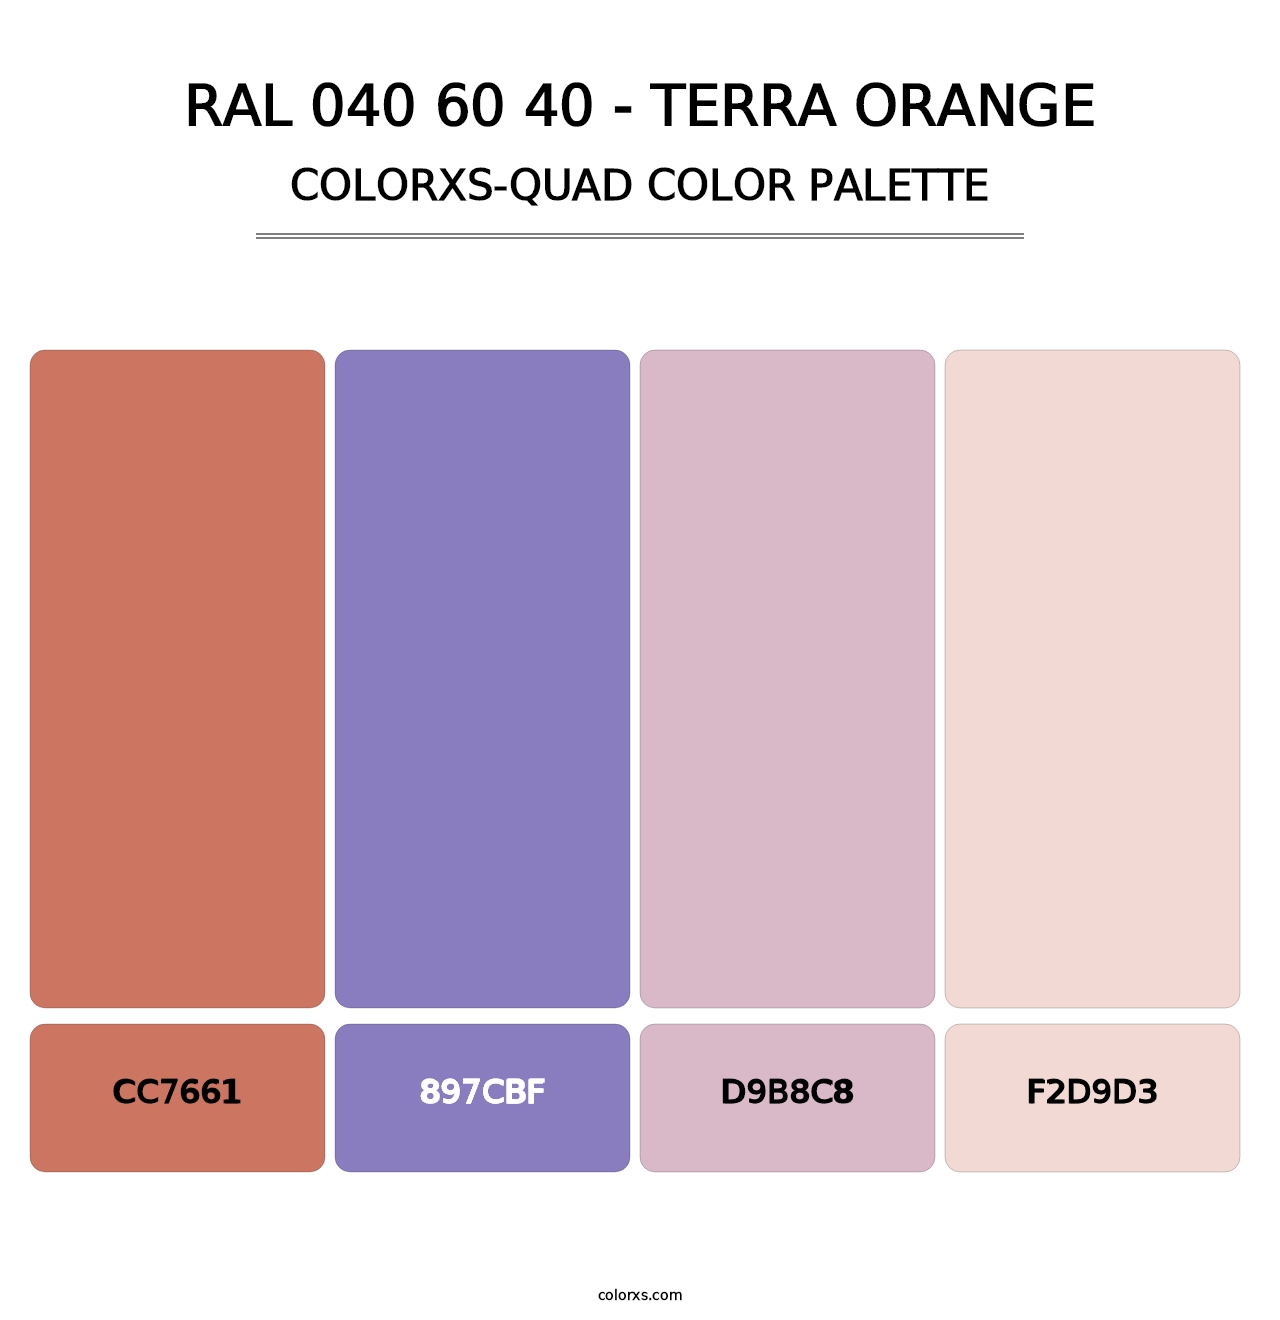 RAL 040 60 40 - Terra Orange - Colorxs Quad Palette